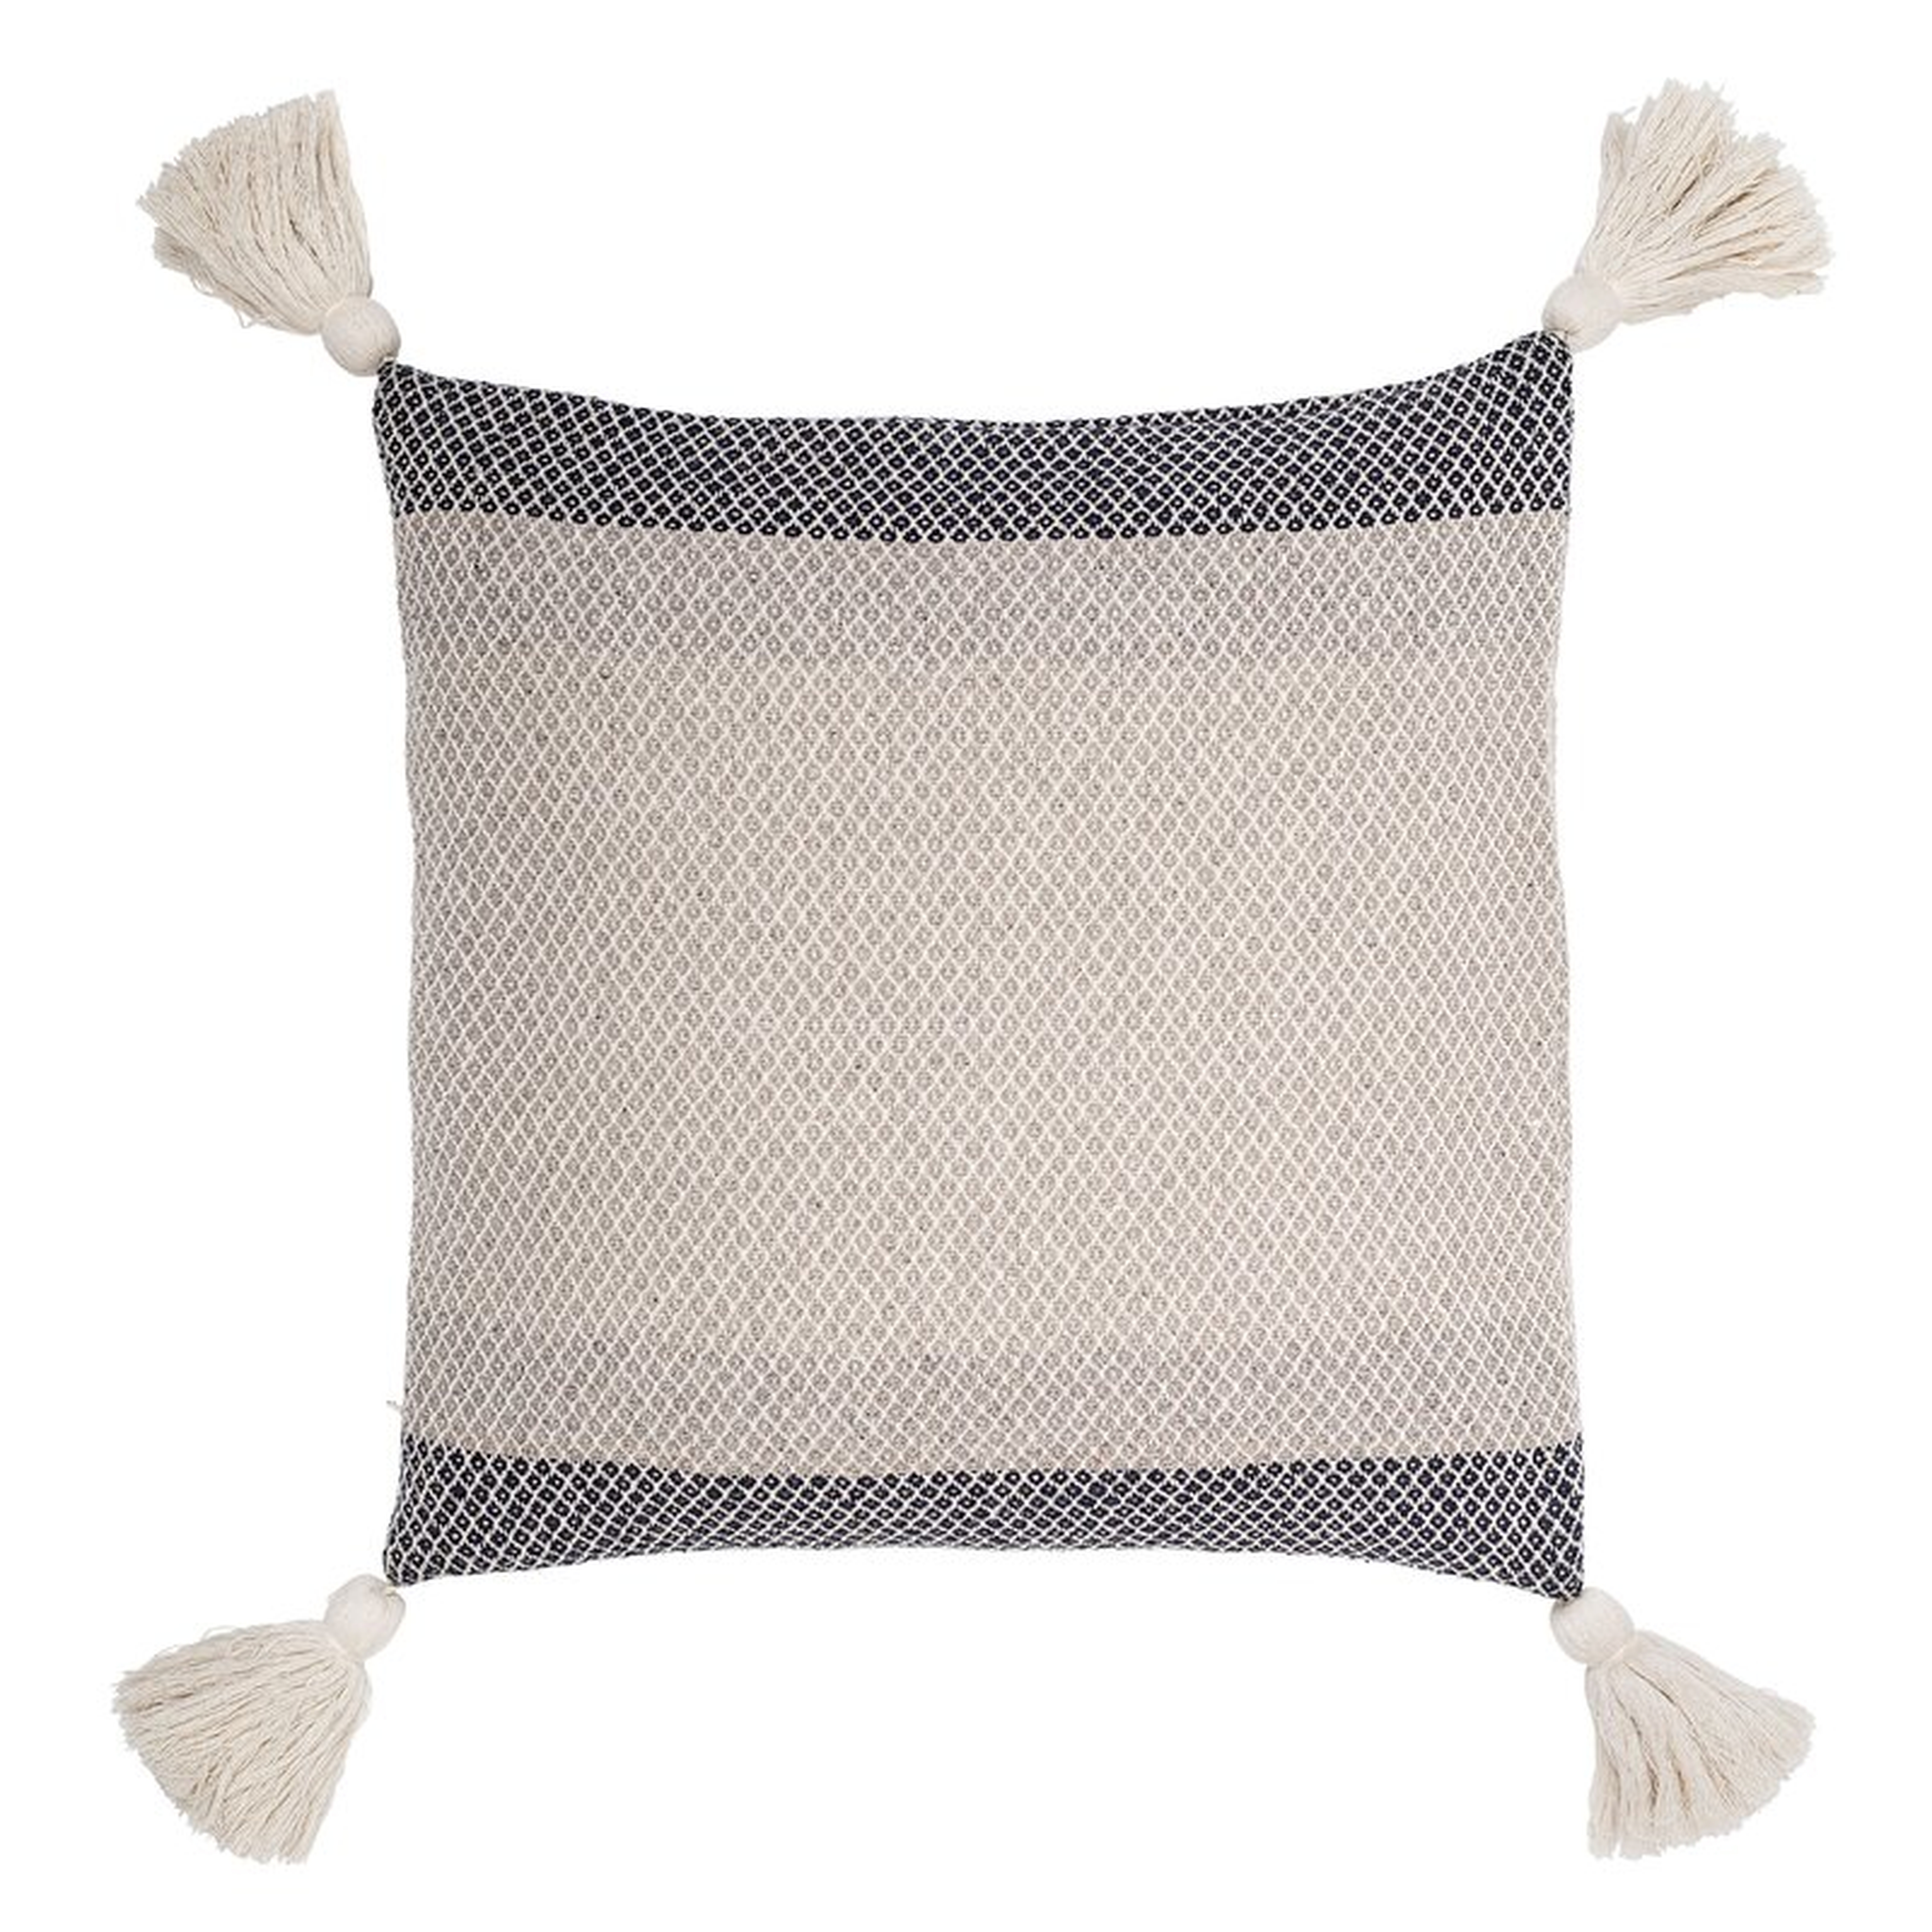 Bloomingville White & Blue Square Color Block Cotton Striped Pillow with Corner Tassels - Perigold